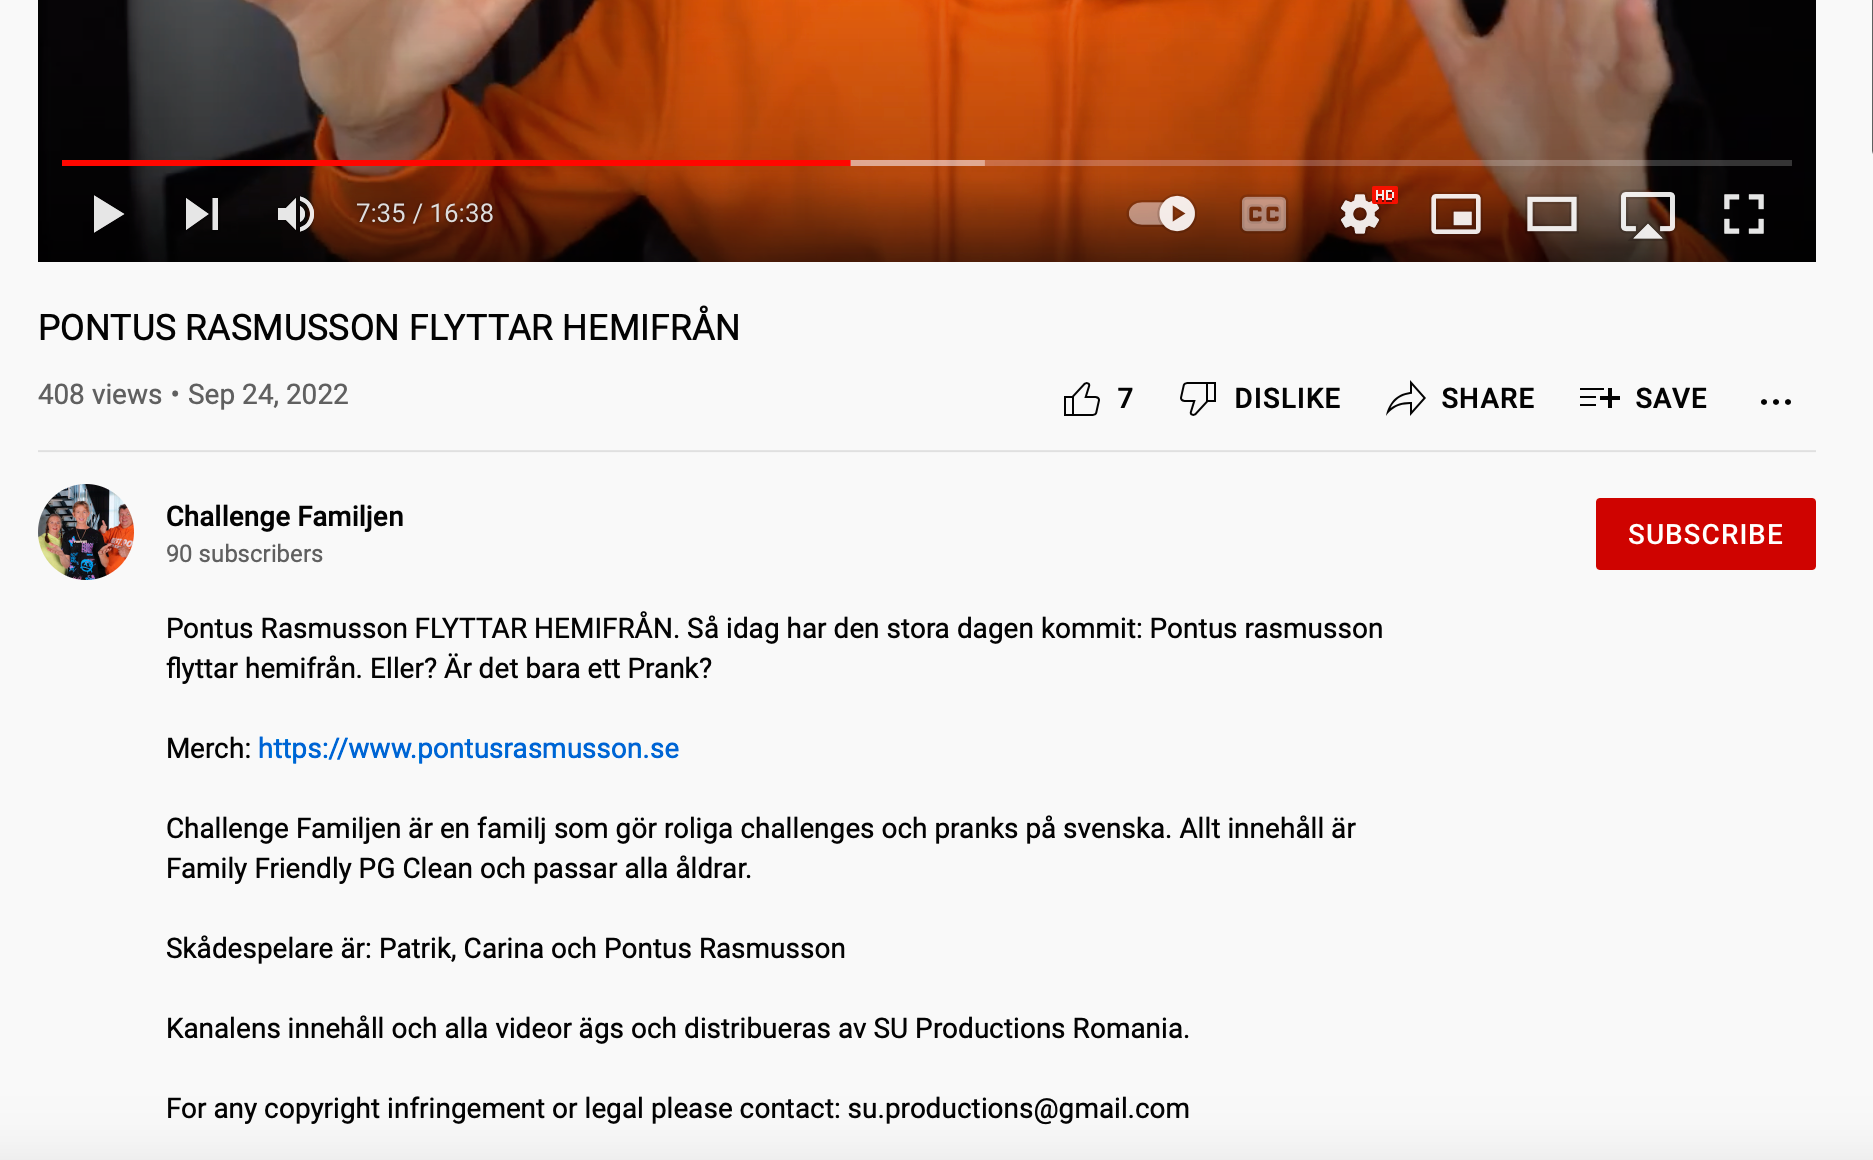 Beskrivningen på Pontus Rasmussons tredje Youtubekanal ”Challenge familjen”.